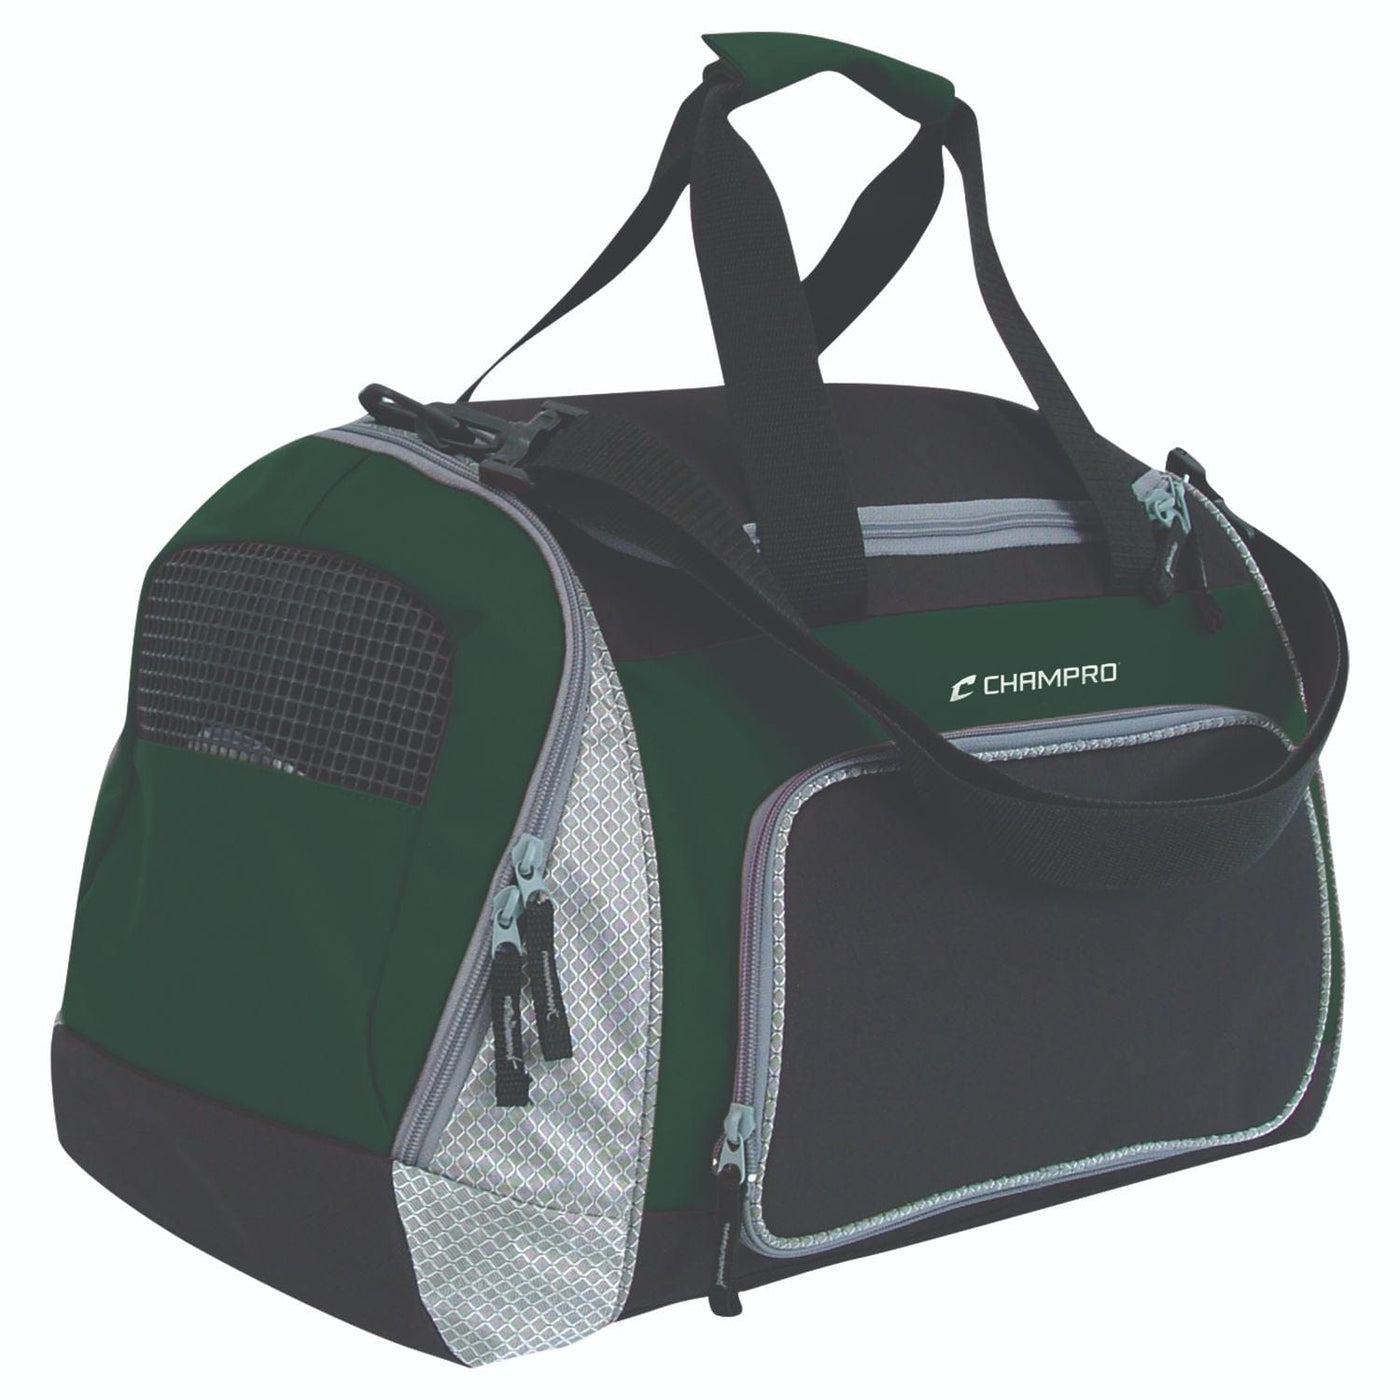 Champro Champro Pro Plus Gear Bag 24 in x 14 in x 12 in Black for Green Sports